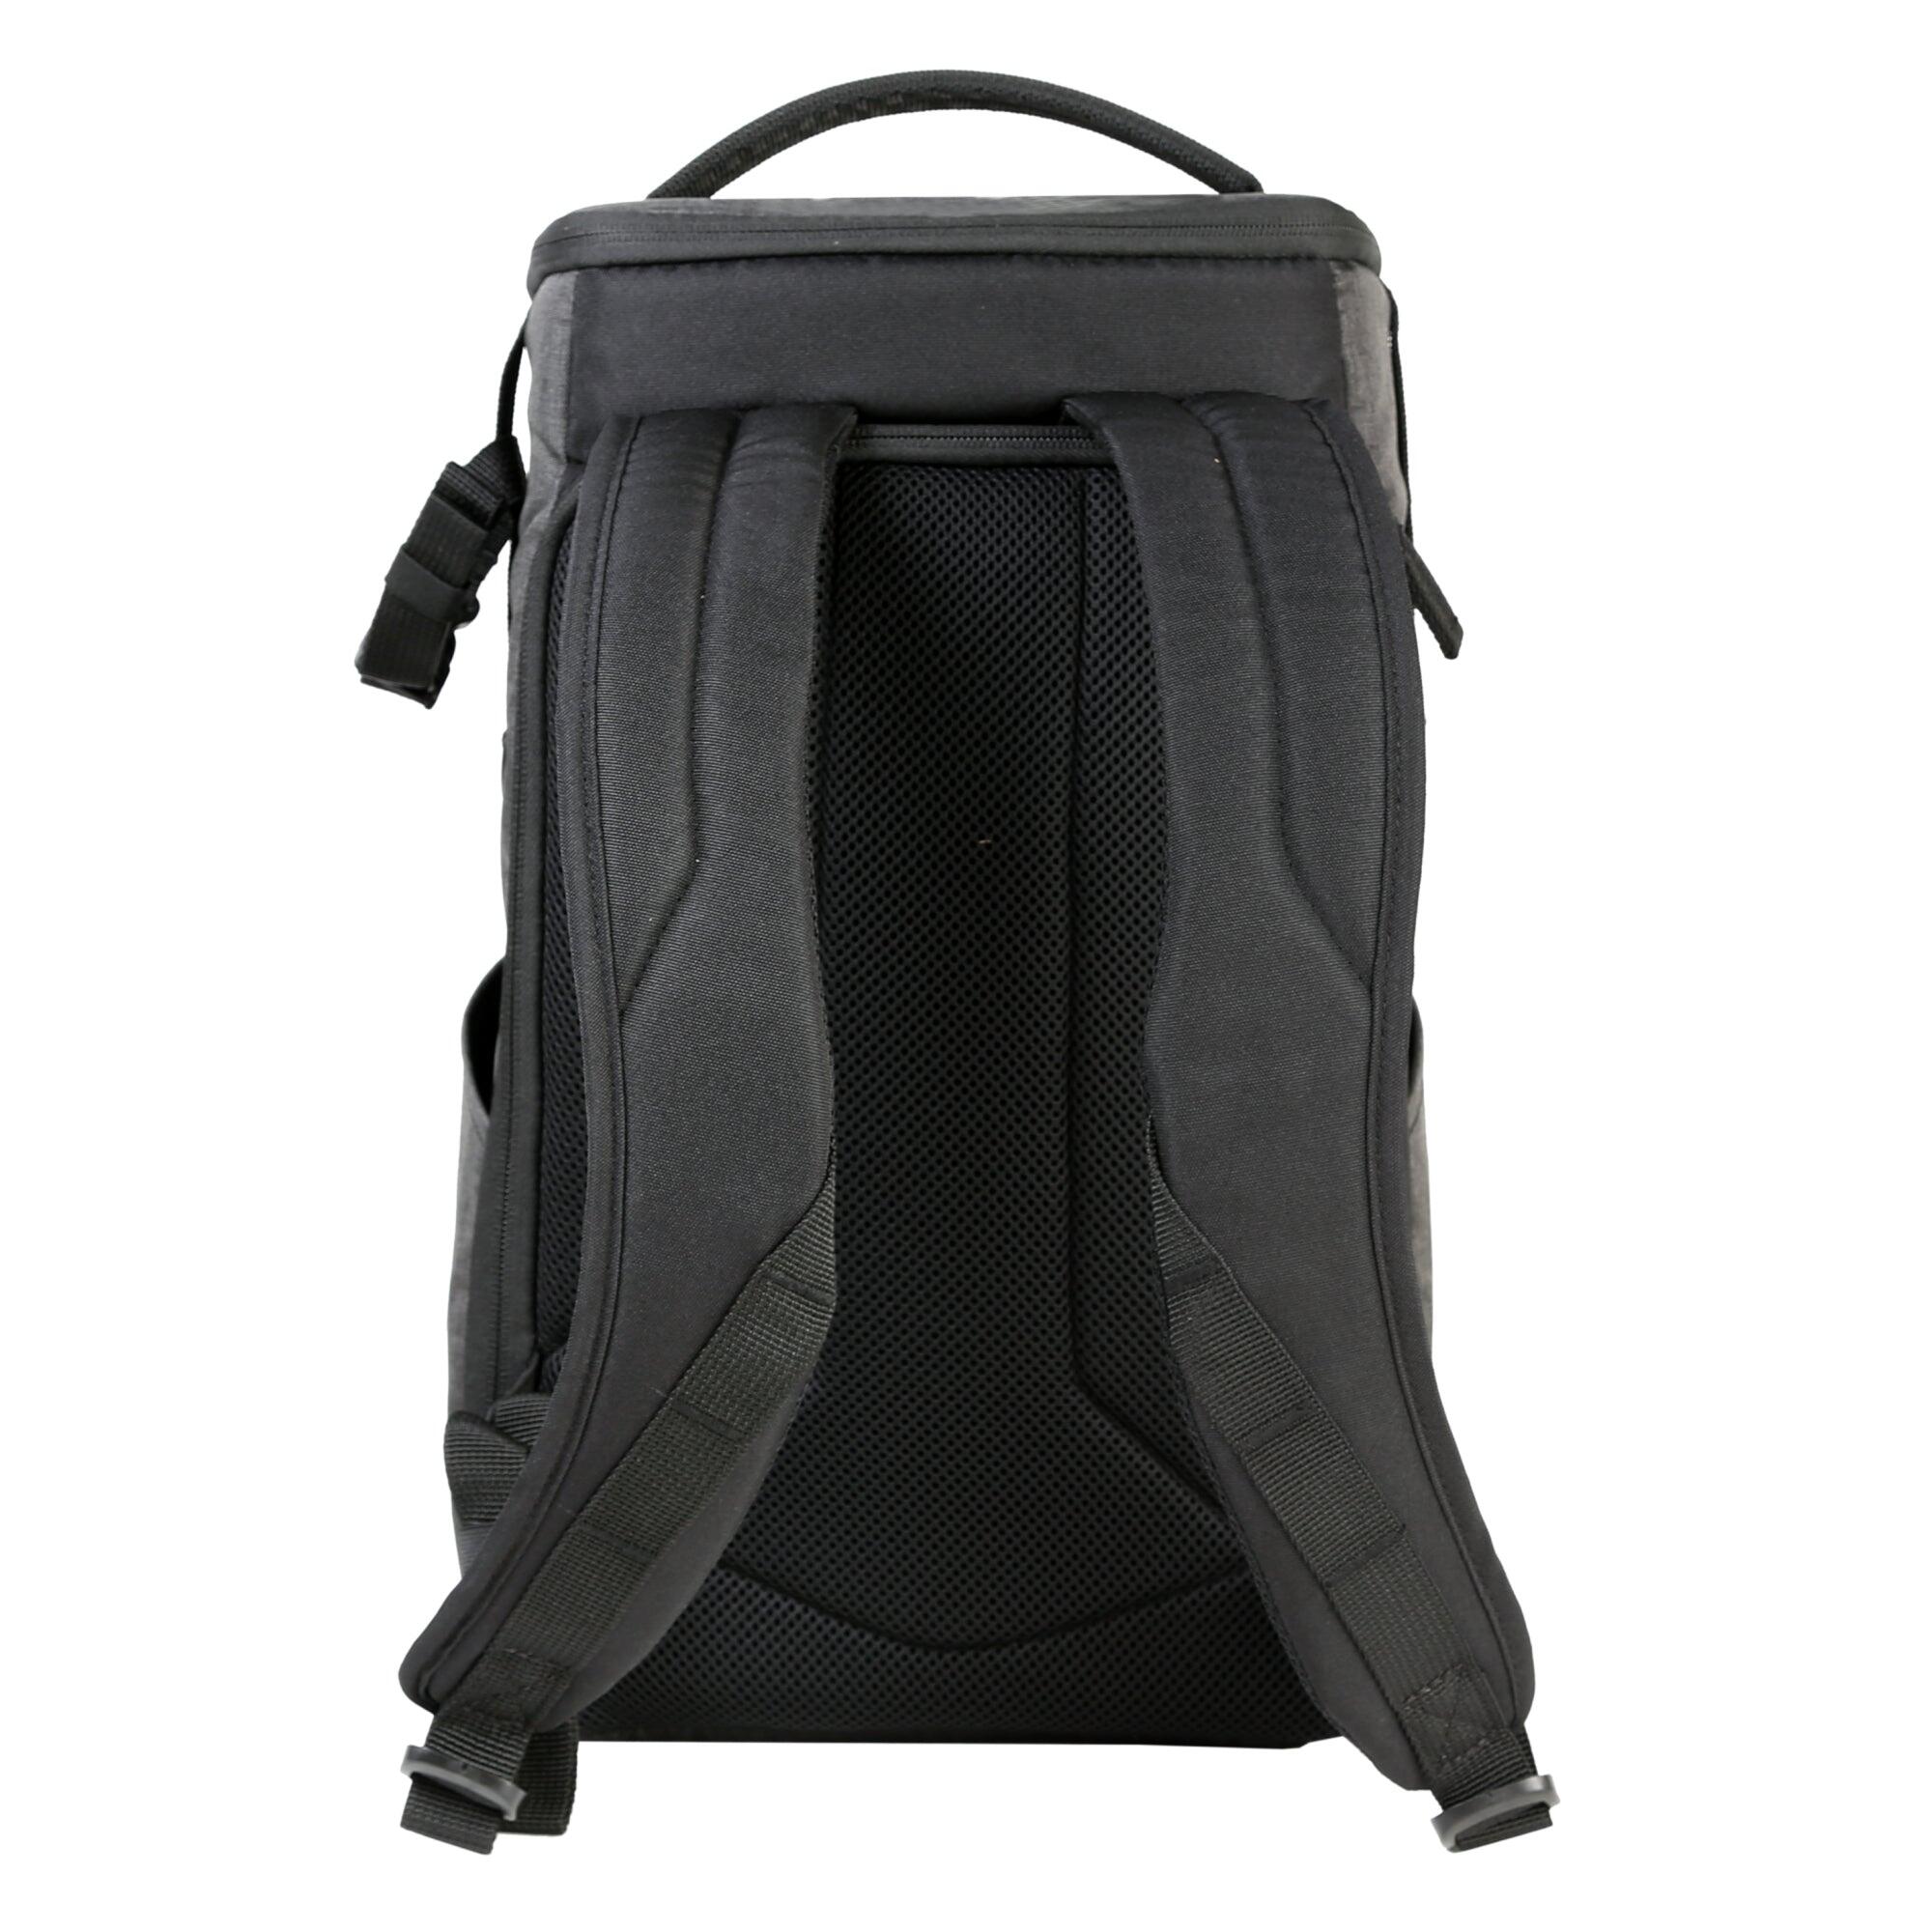 VESTA Aspire 41 GY Camera Backpack - Grey 4/5